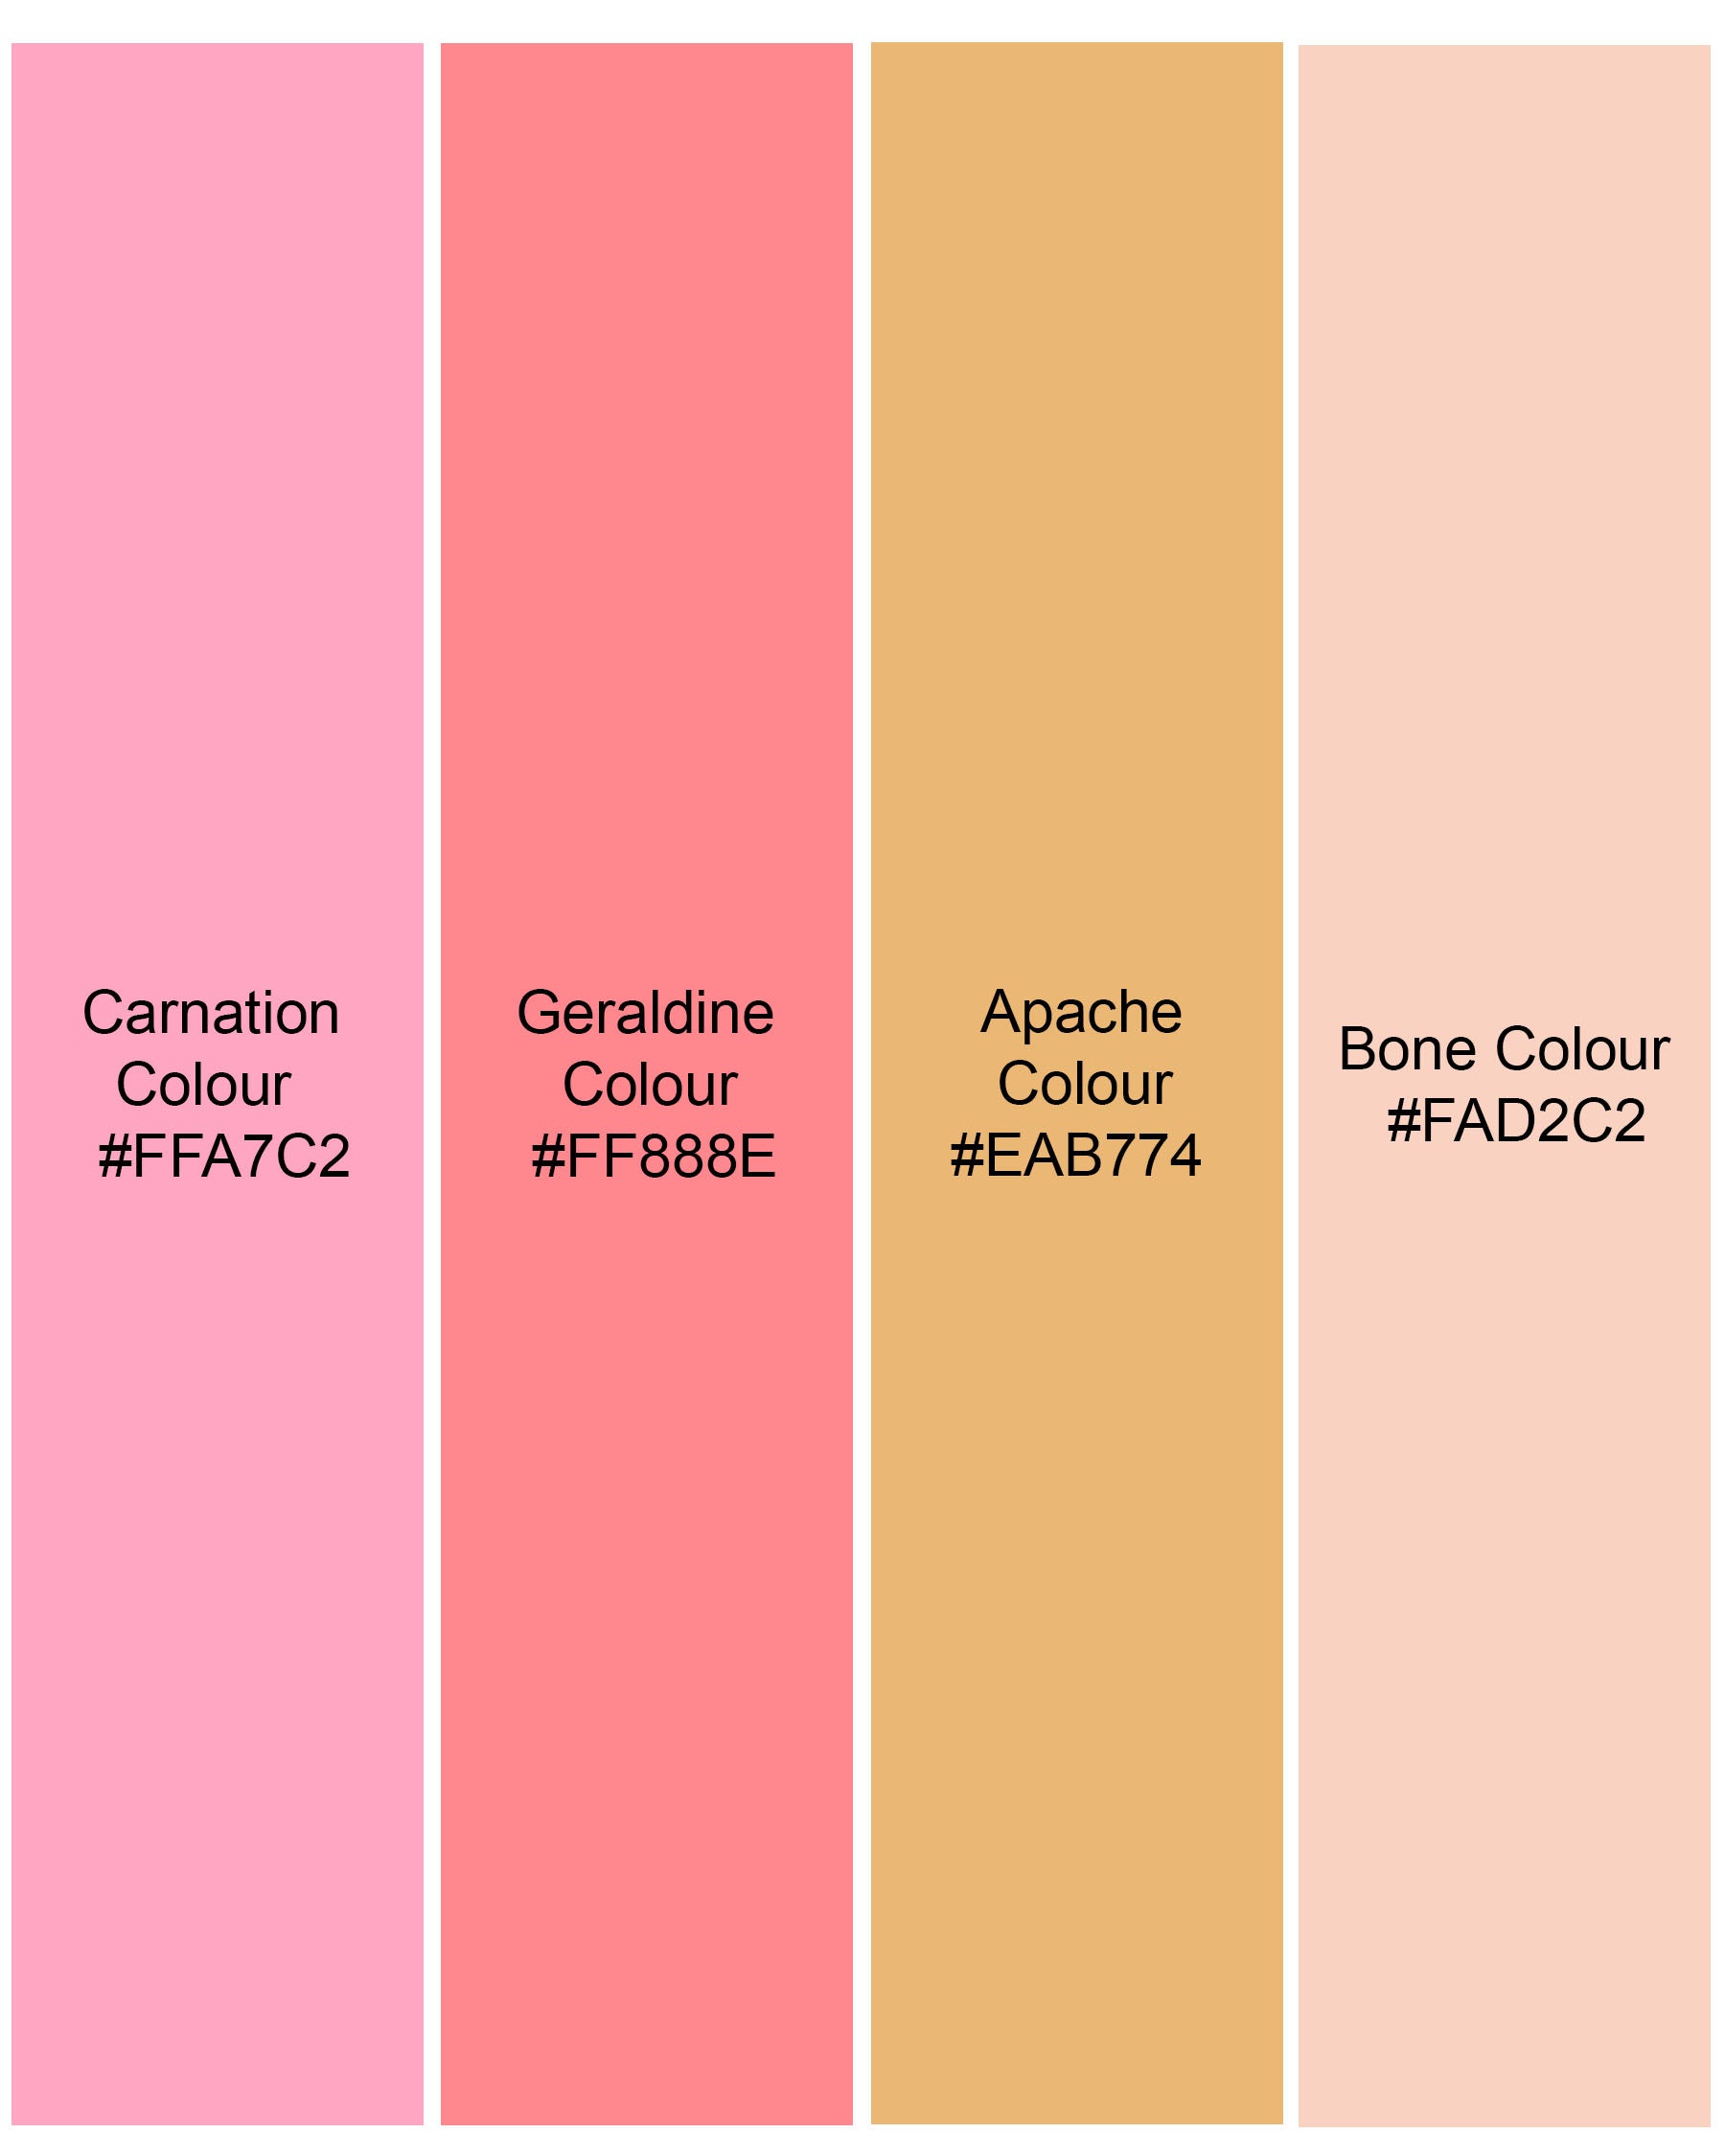 Carnation Pink and Bone Peach Multicolour Striped Premium Cotton Shirt 7953-BD-BLE-38, 7953-BD-BLE-H-38, 7953-BD-BLE-39, 7953-BD-BLE-H-39, 7953-BD-BLE-40, 7953-BD-BLE-H-40, 7953-BD-BLE-42, 7953-BD-BLE-H-42, 7953-BD-BLE-44, 7953-BD-BLE-H-44, 7953-BD-BLE-46, 7953-BD-BLE-H-46, 7953-BD-BLE-48, 7953-BD-BLE-H-48, 7953-BD-BLE-50, 7953-BD-BLE-H-50, 7953-BD-BLE-52, 7953-BD-BLE-H-52